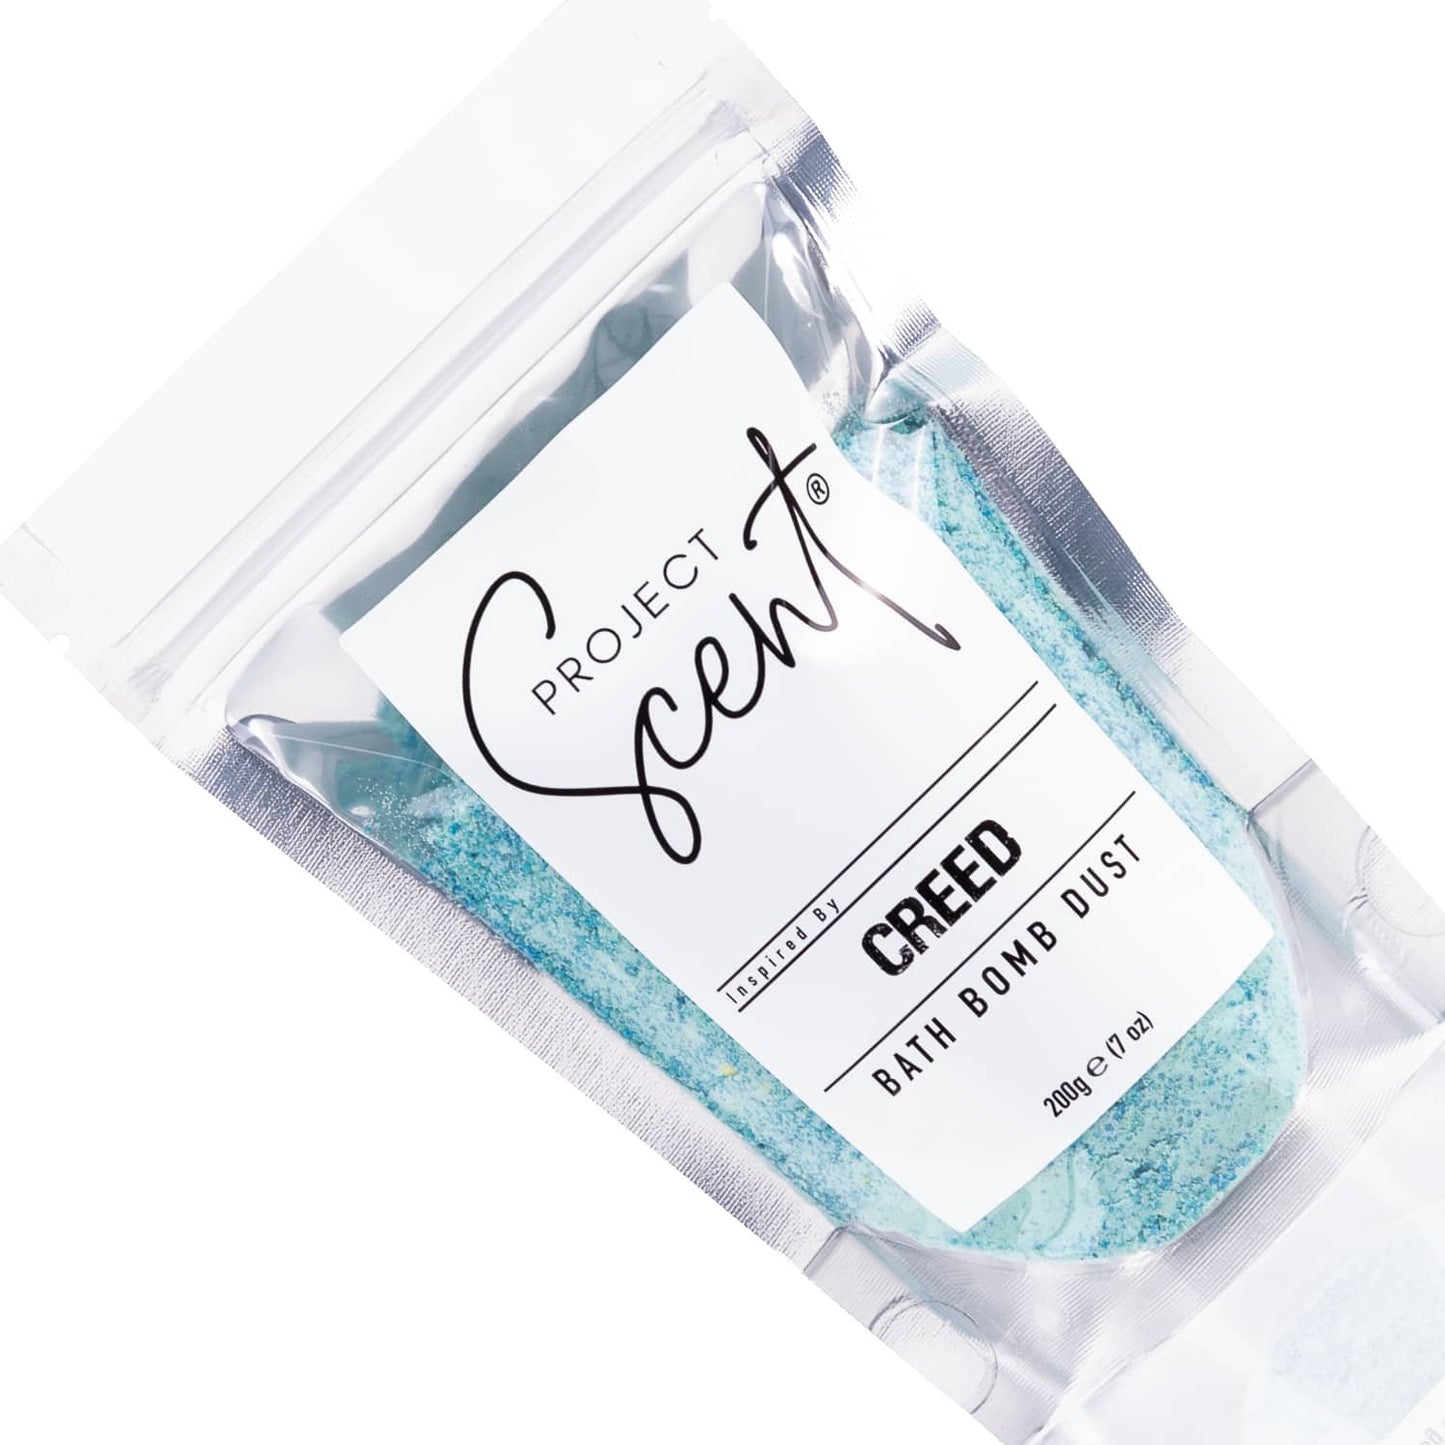 Creed Inspired Bath Bomb Dust 200g